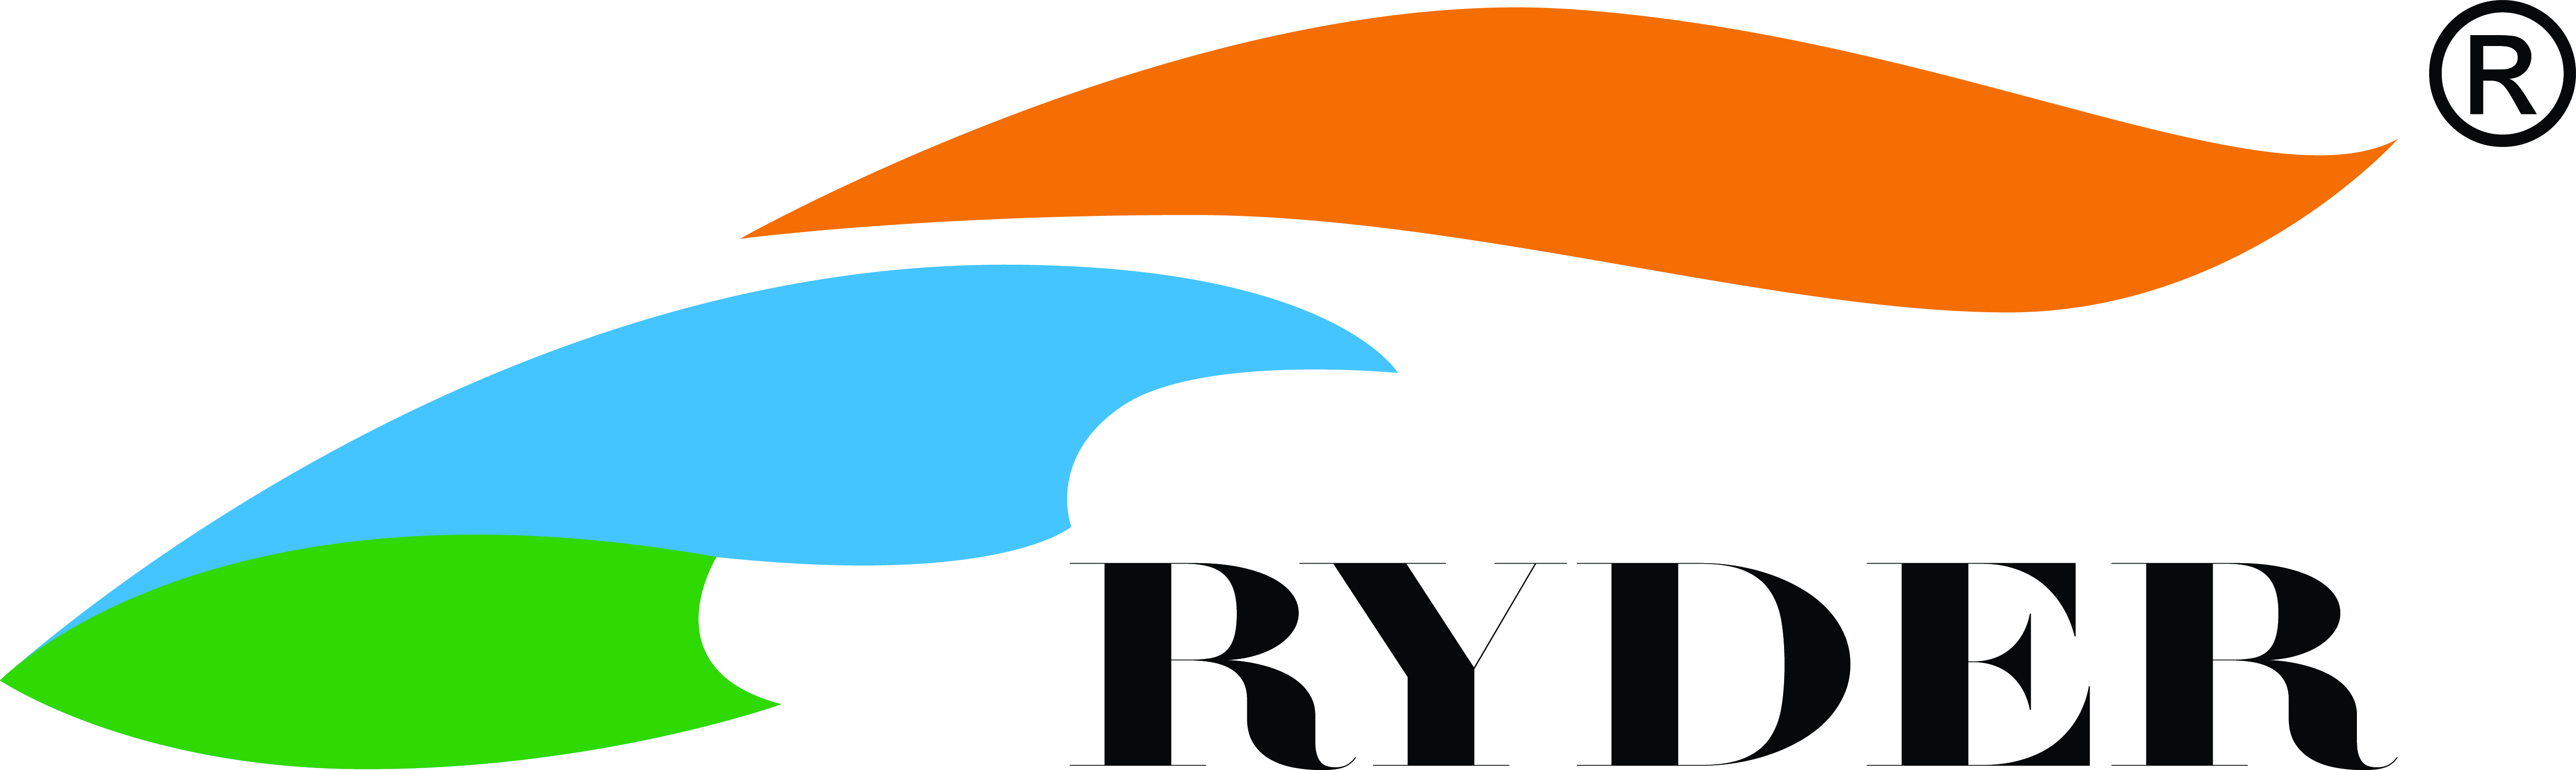 Móc treo Ryder Carabiner L4009 - 6749